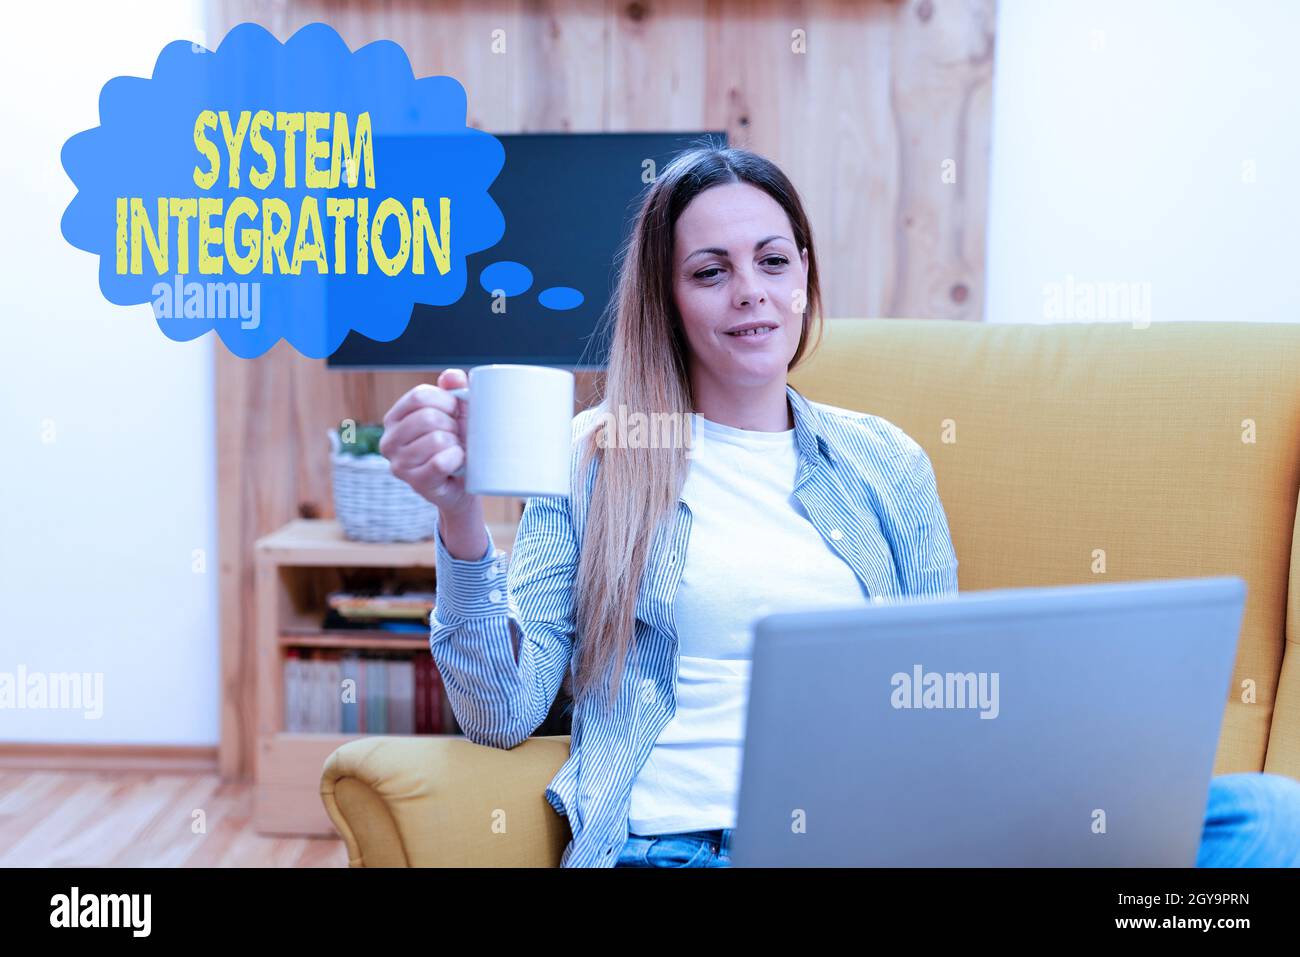 Inspiration showing sign Systemintegration, Business Idea Prozess der Zusammenführung der Komponente Subsystem Zusammenfassung Geben Business Advice Online Stockfoto